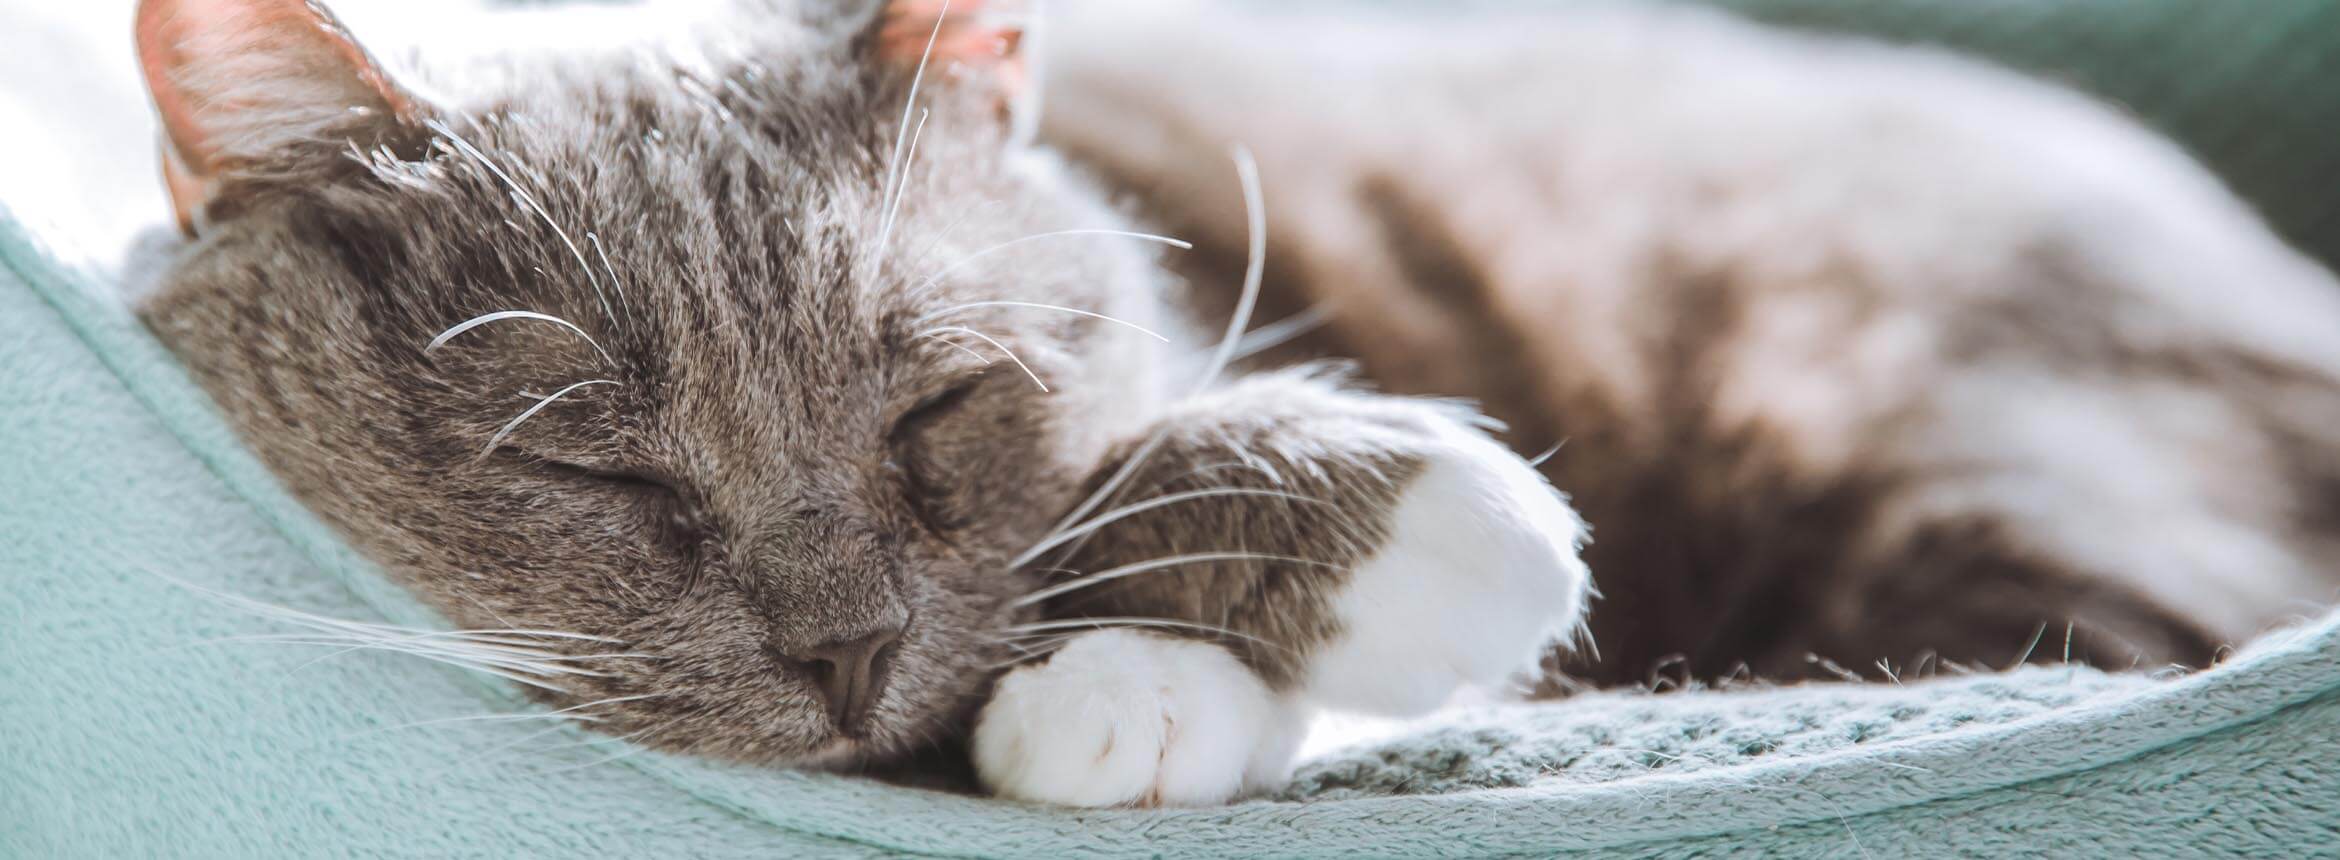 Image of a grey sleeping cat